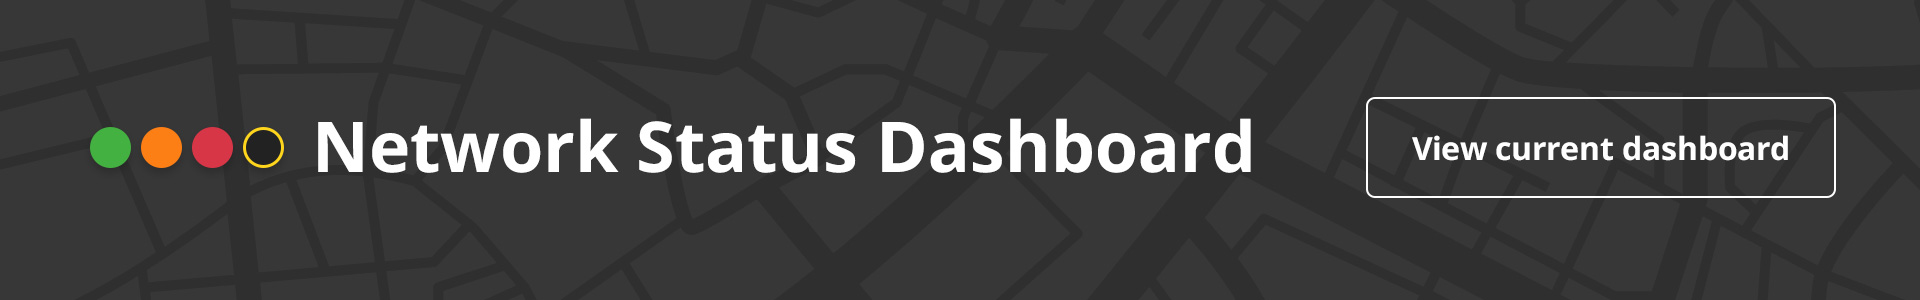 Network Status Dashboard